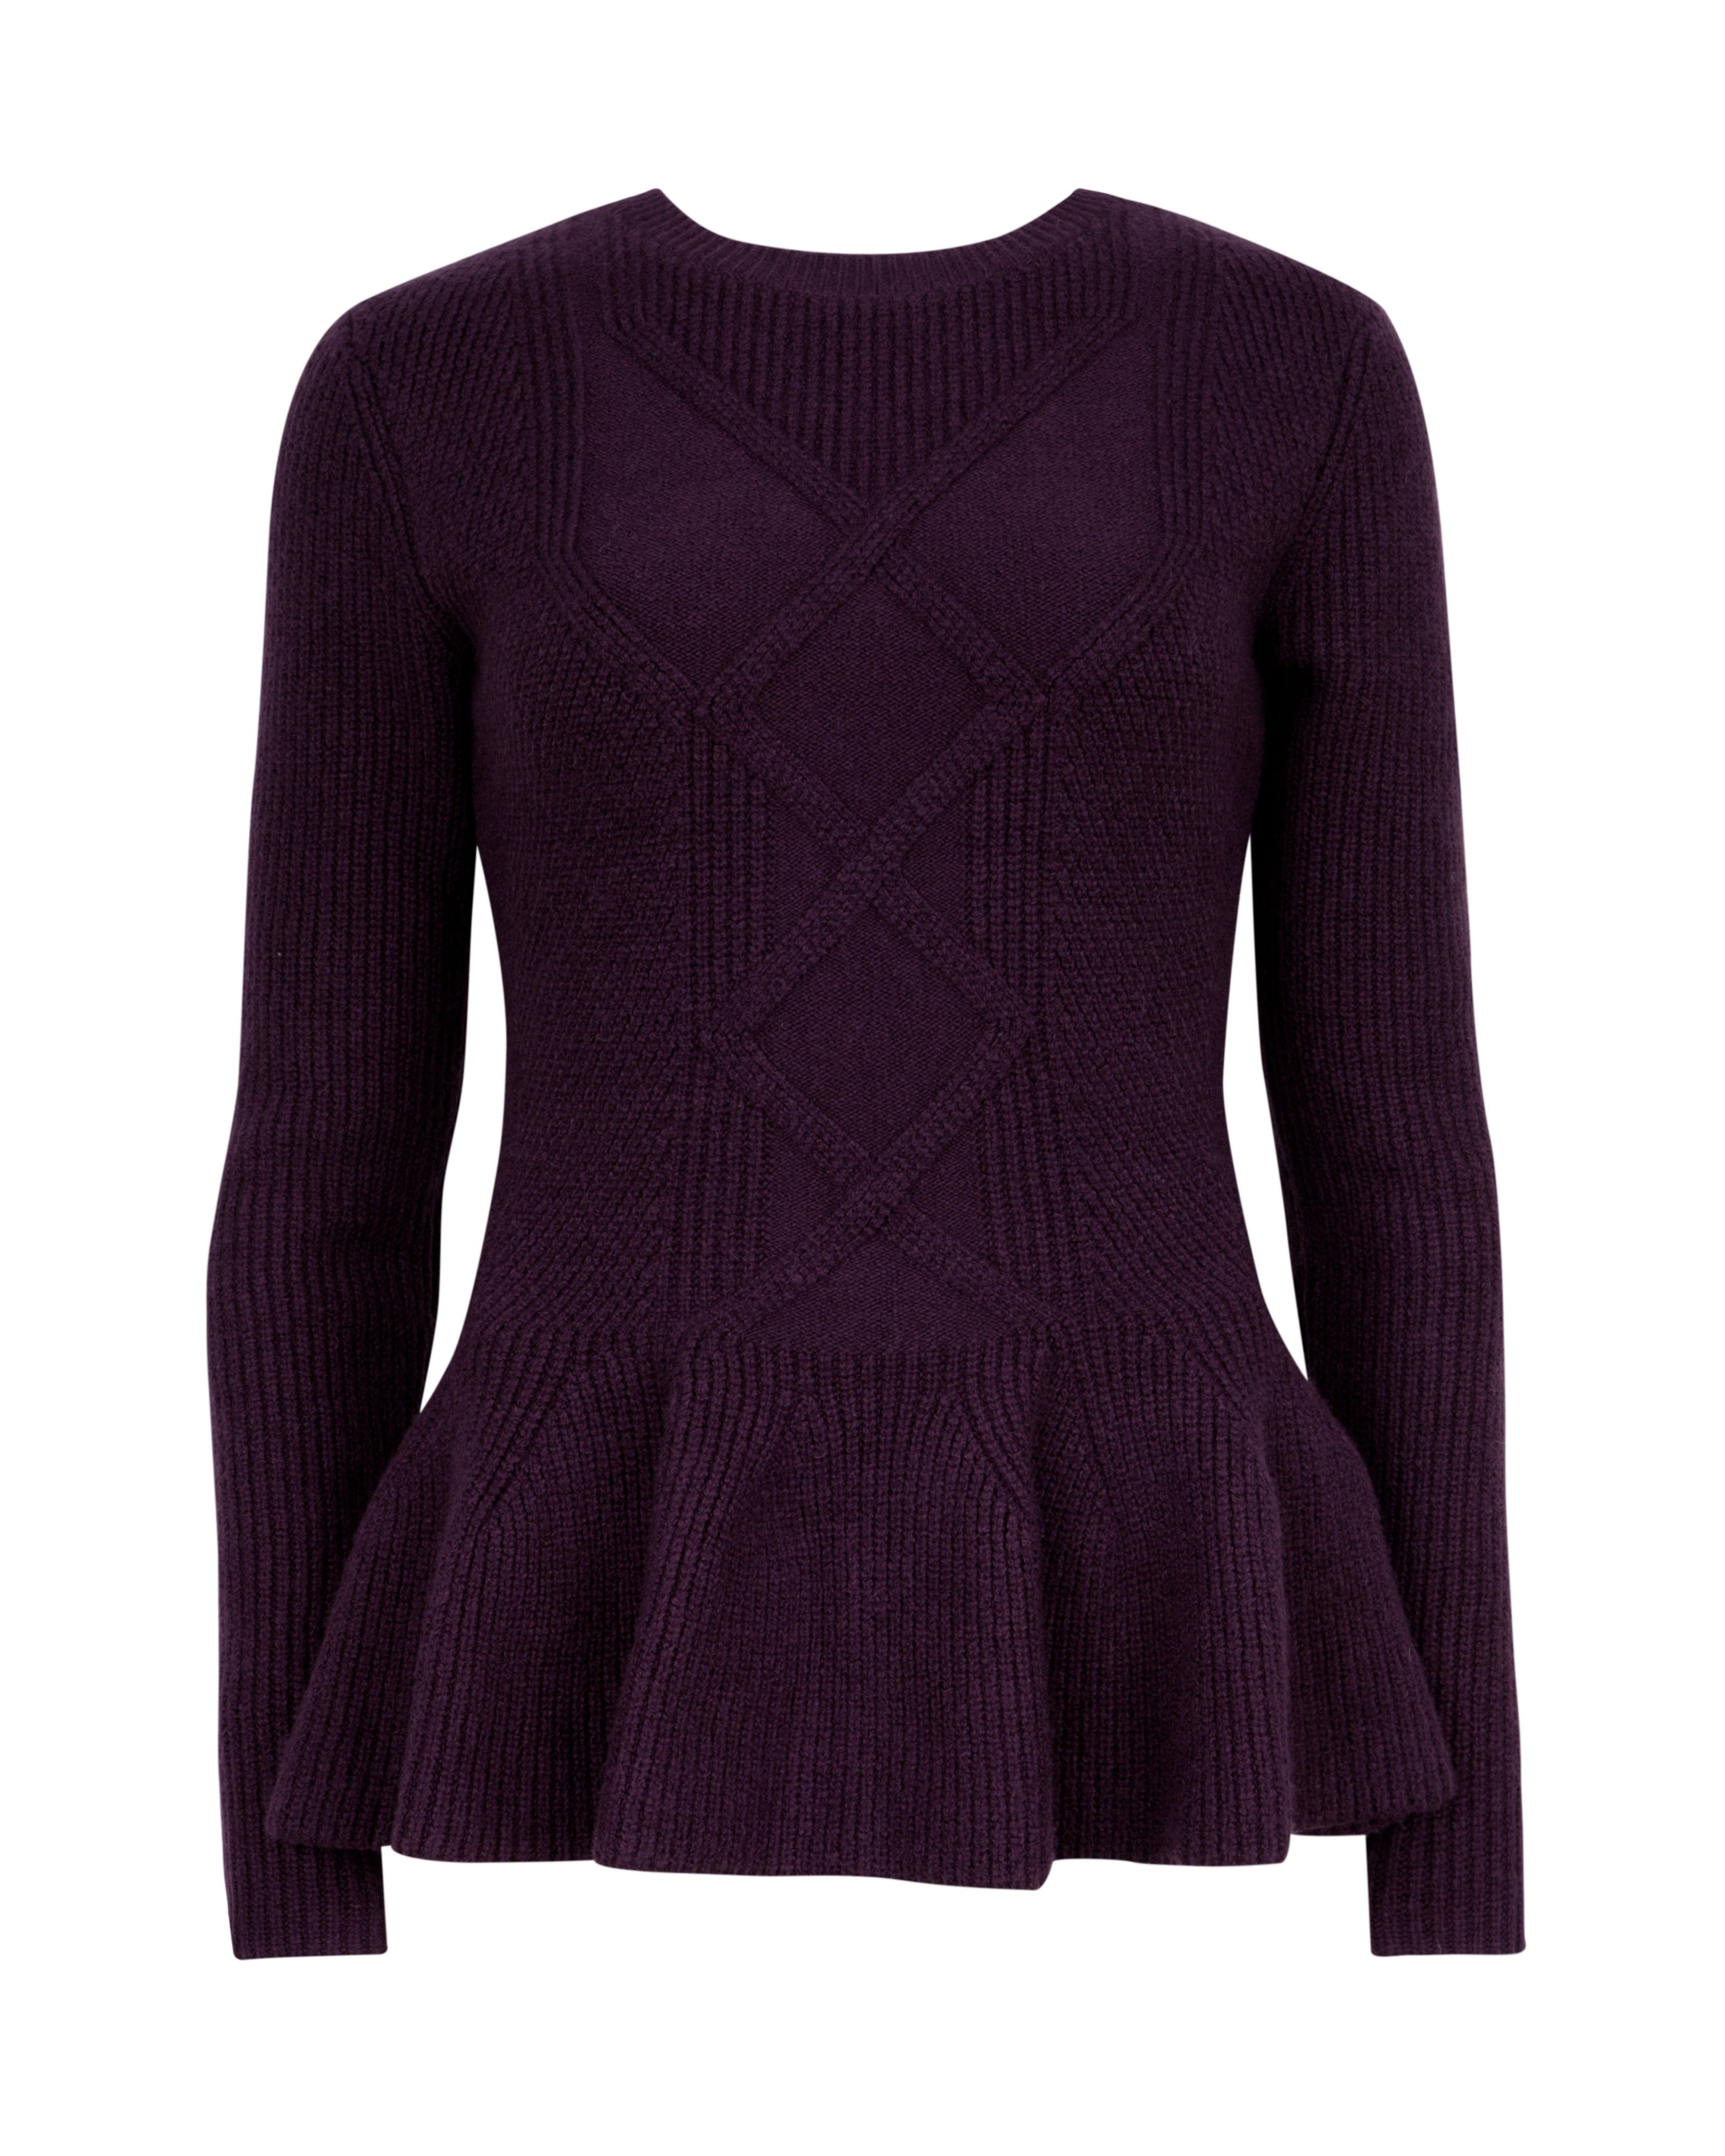 Ted Baker Ohavia Peplum Detail Sweater in Purple (Grape) | Lyst